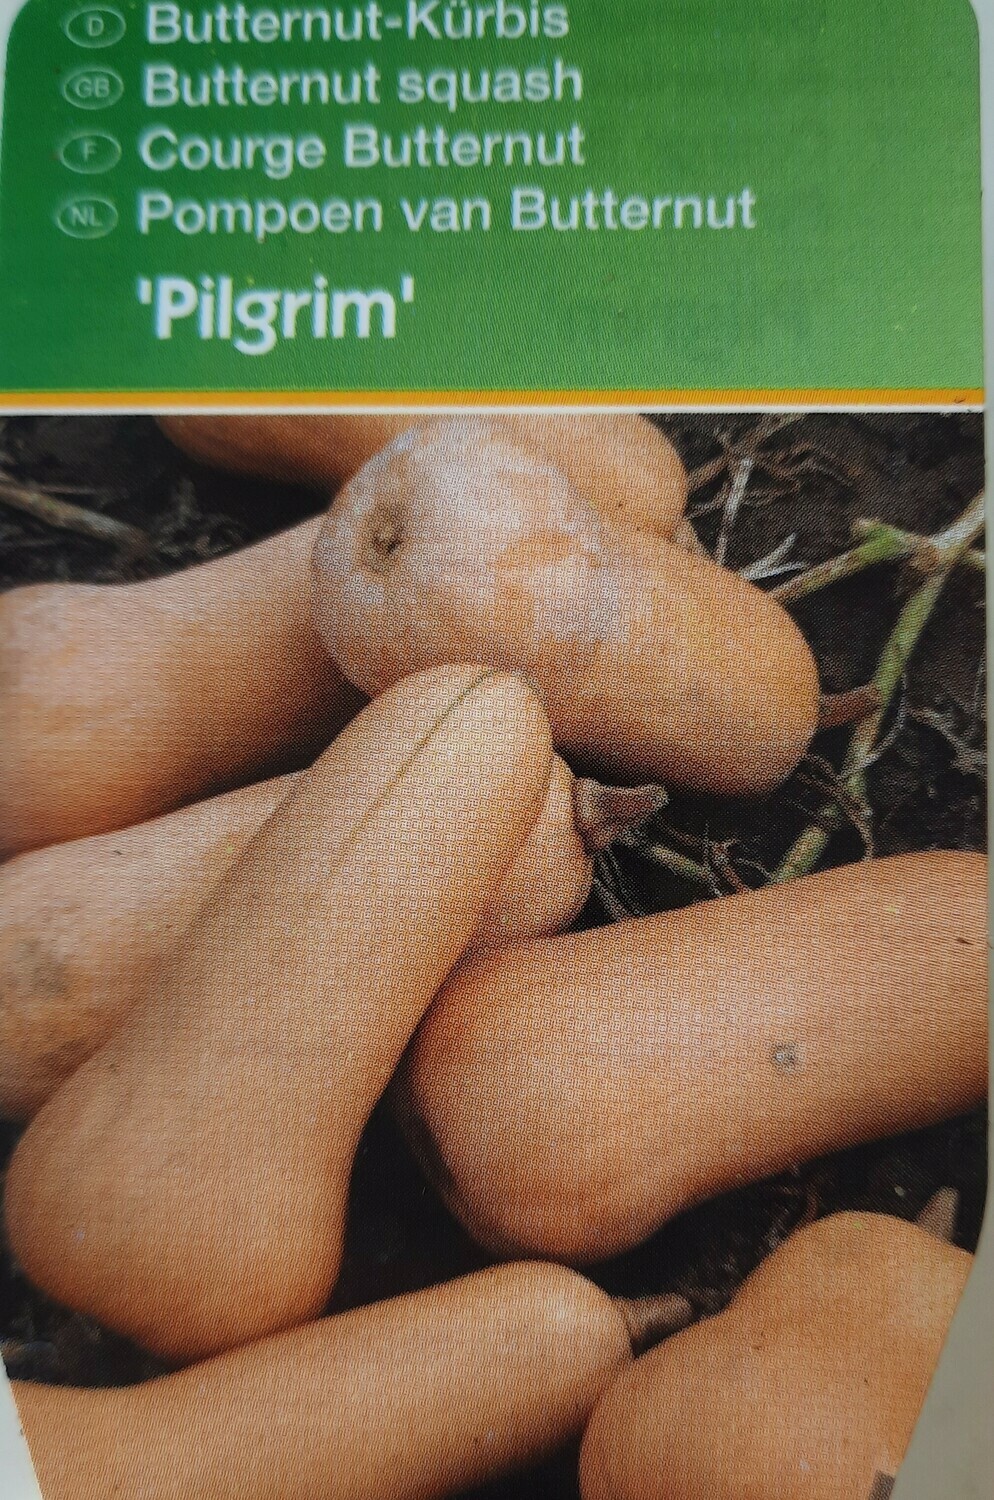 Butternut-Kürbis "Pilgrim"